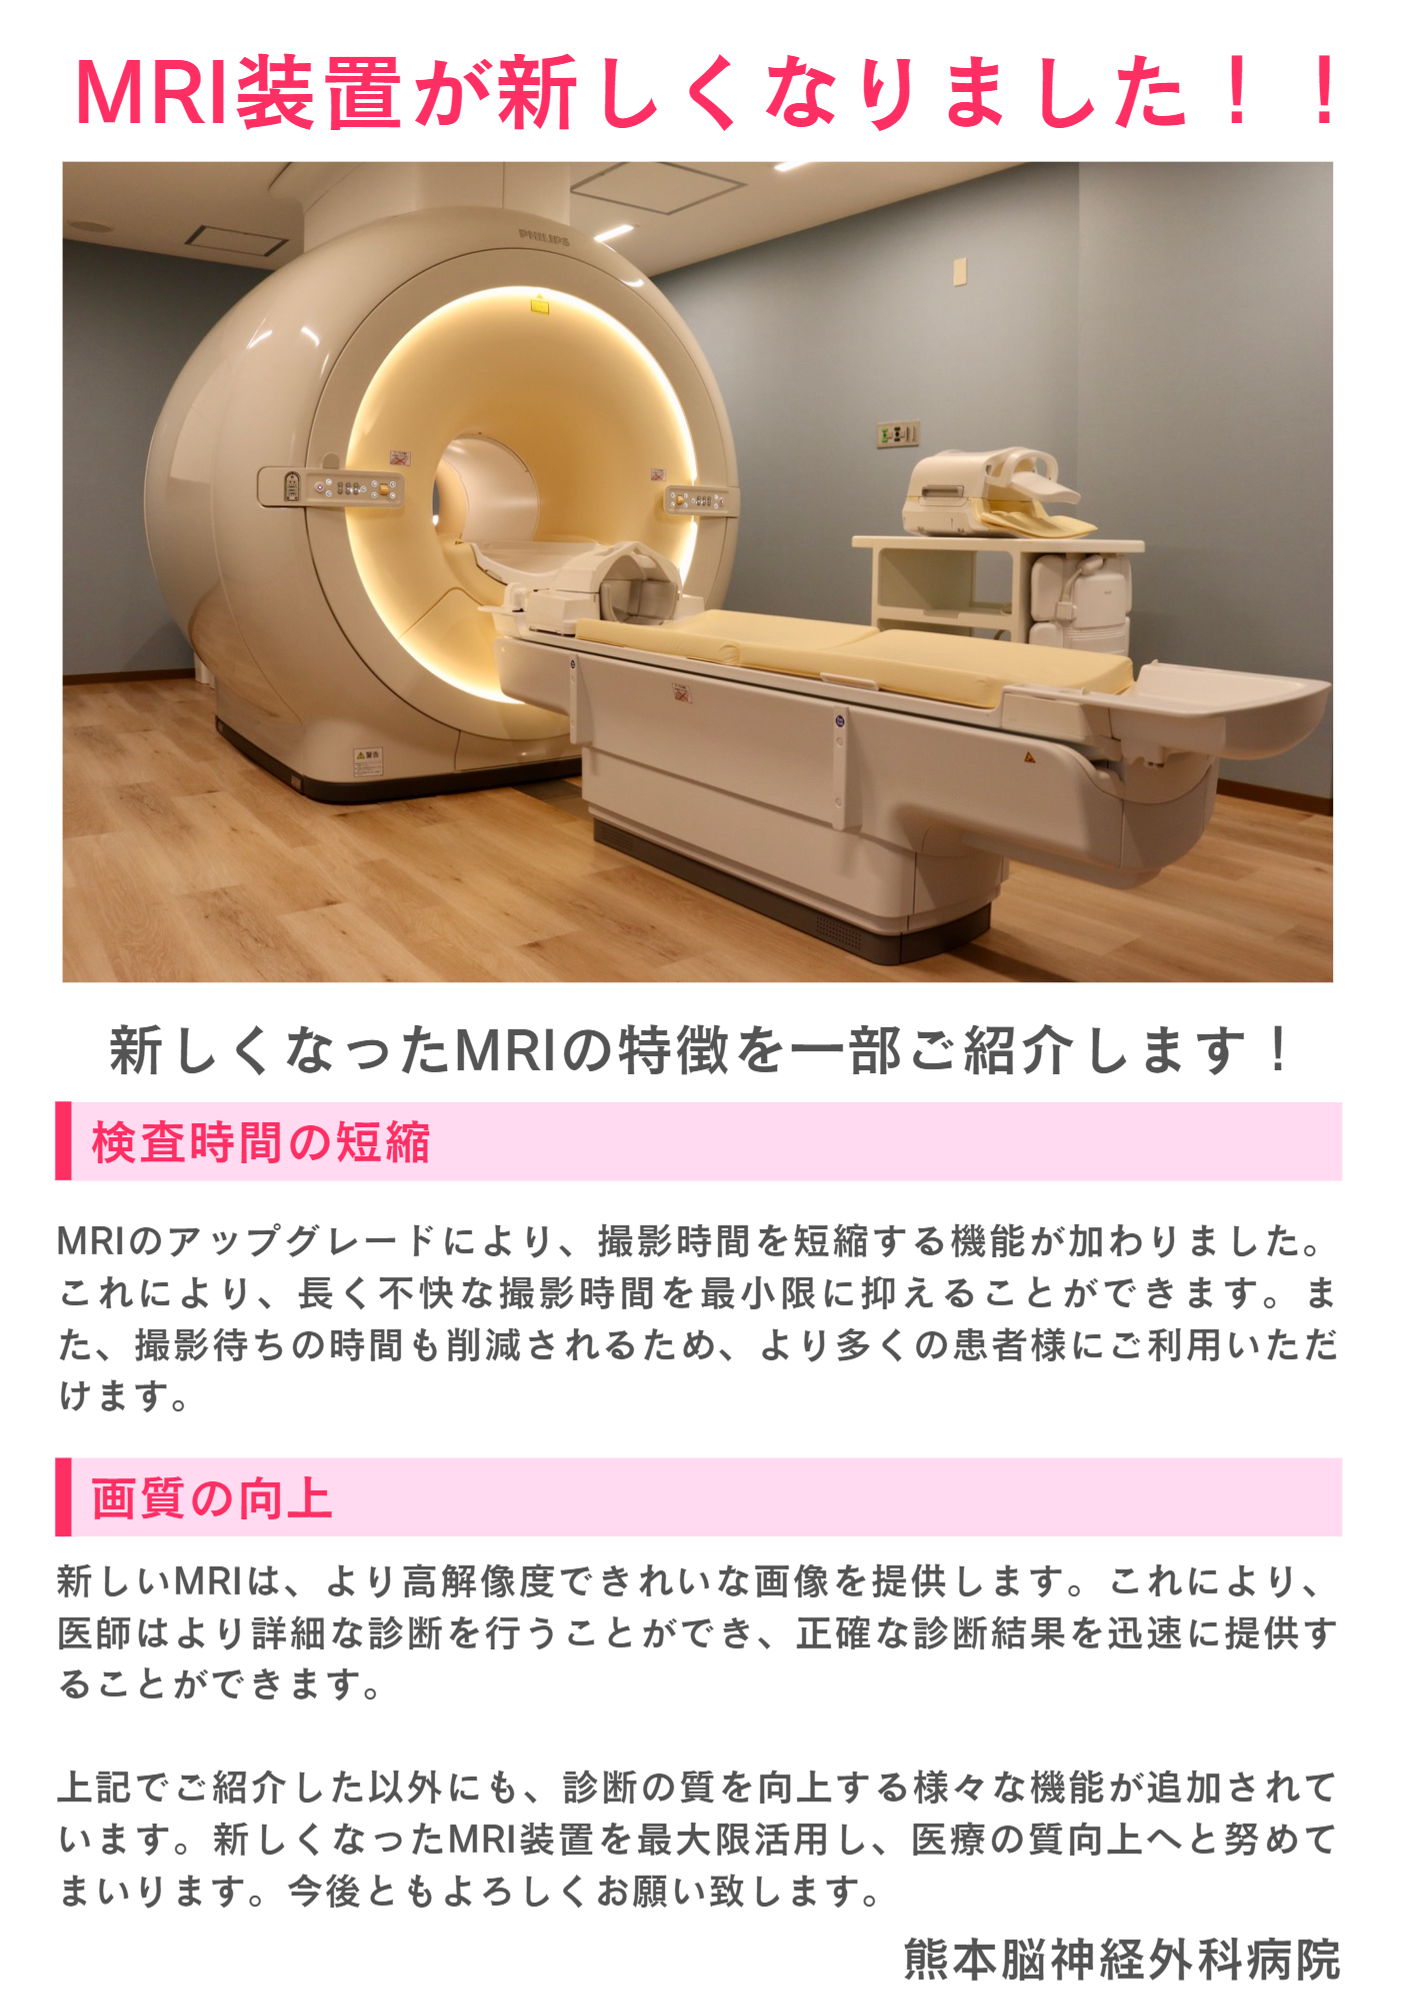 MRI装置更新完了のお知らせ